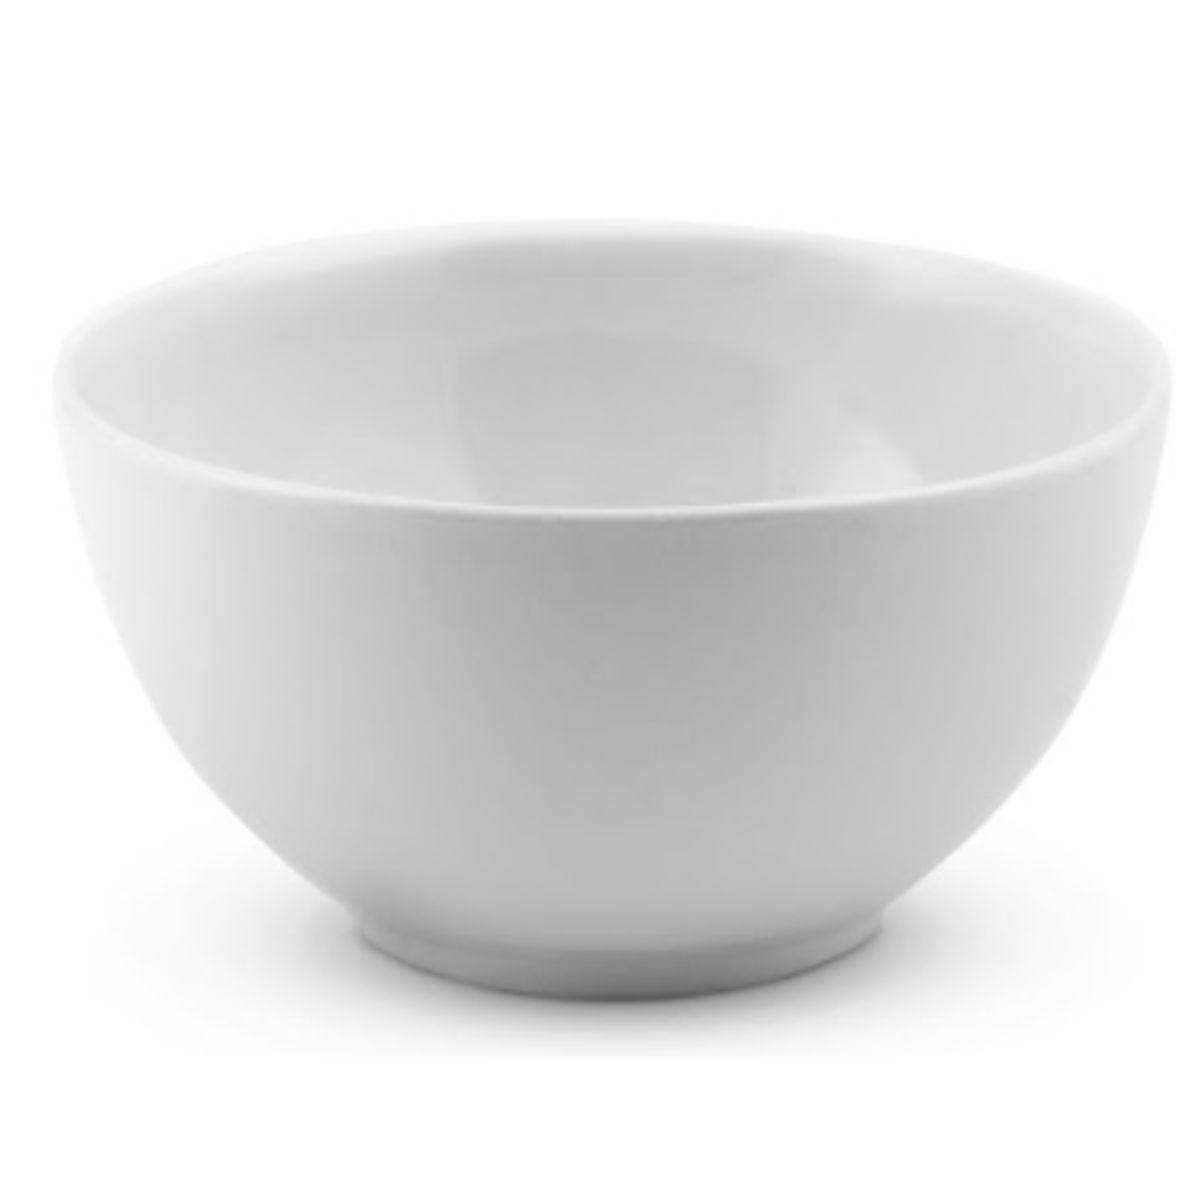 bowl-ceramica-crfh-bco-650ml-ho235562-1.jpg